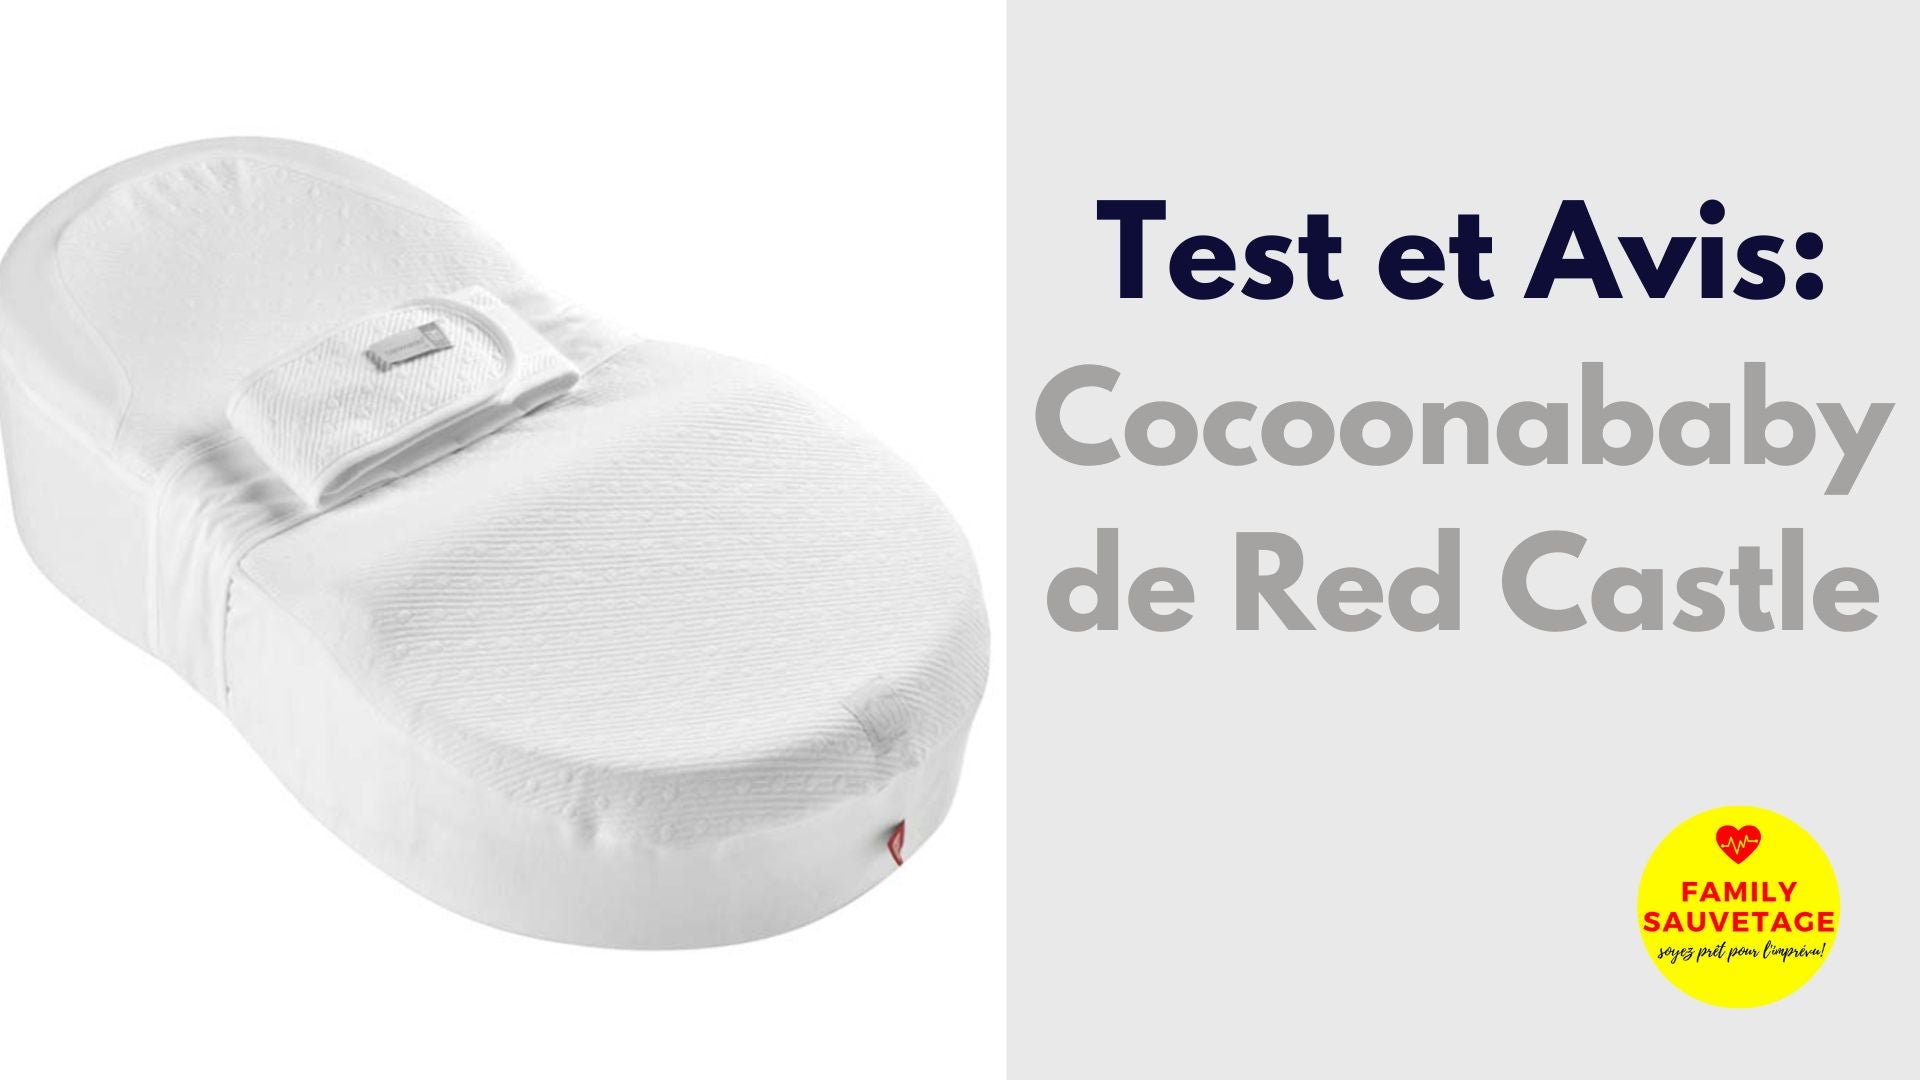 test avis cocoonababy red castle